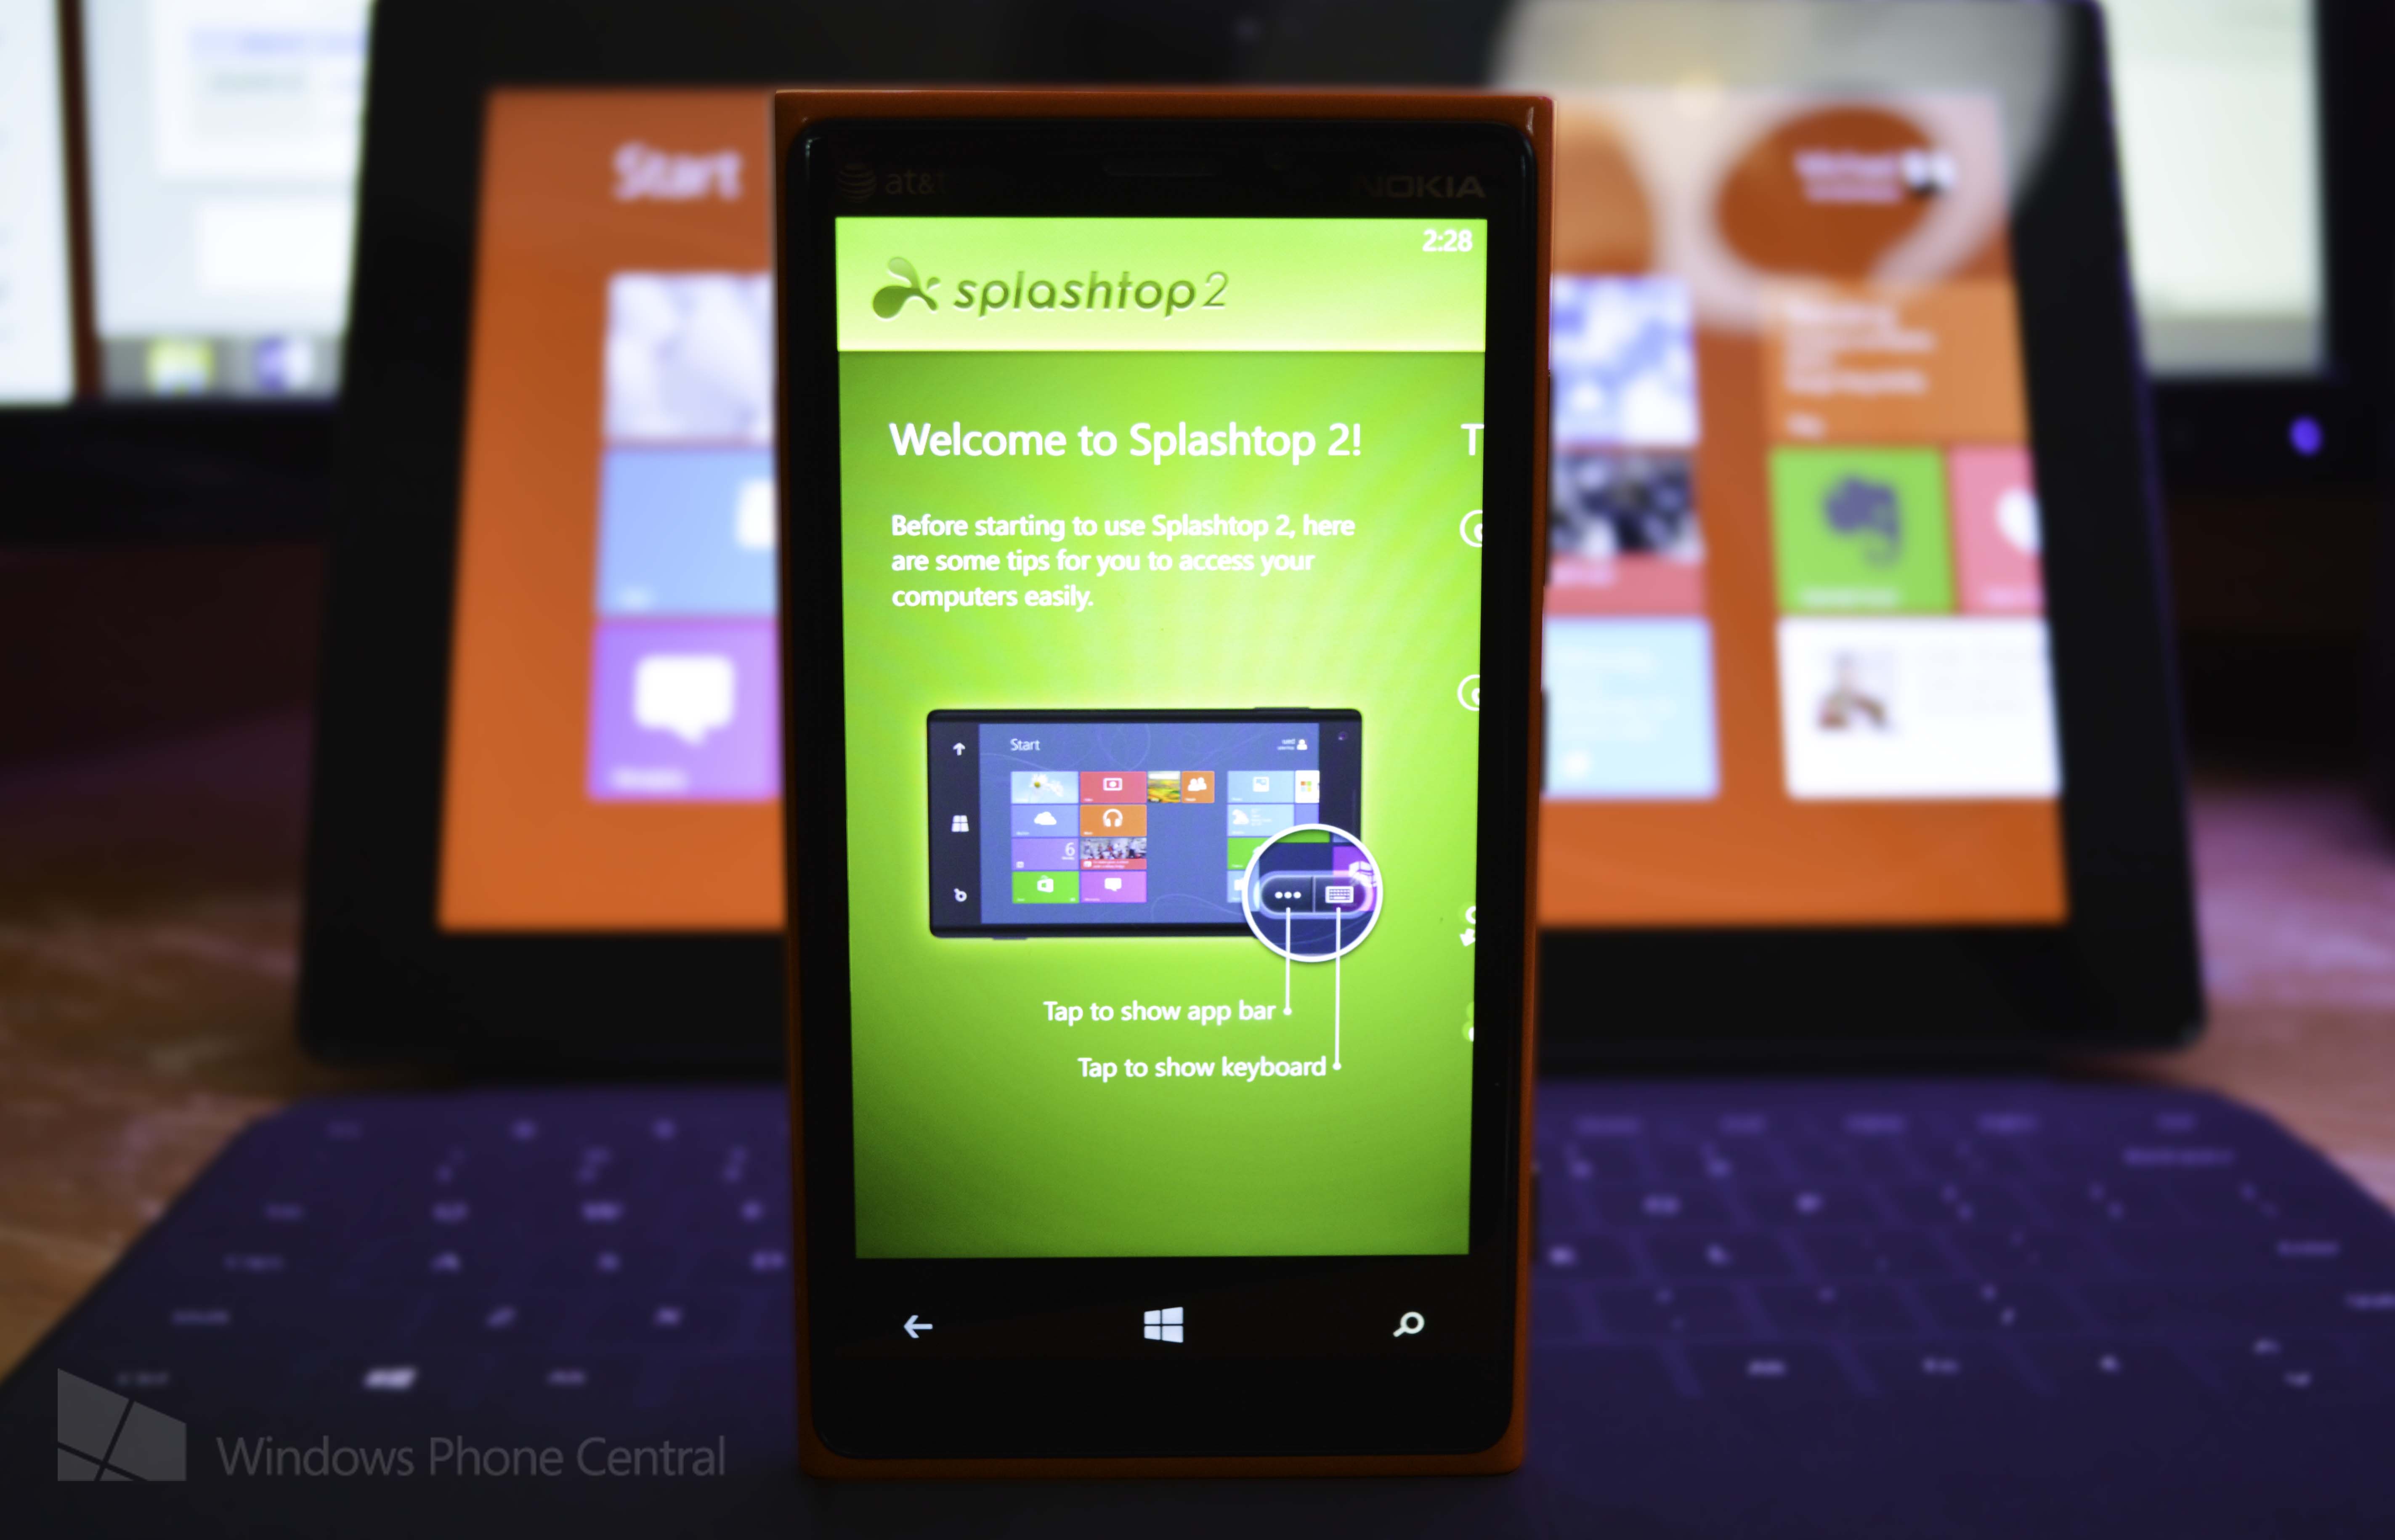 Splsahtop 2 for Windows Phone 8